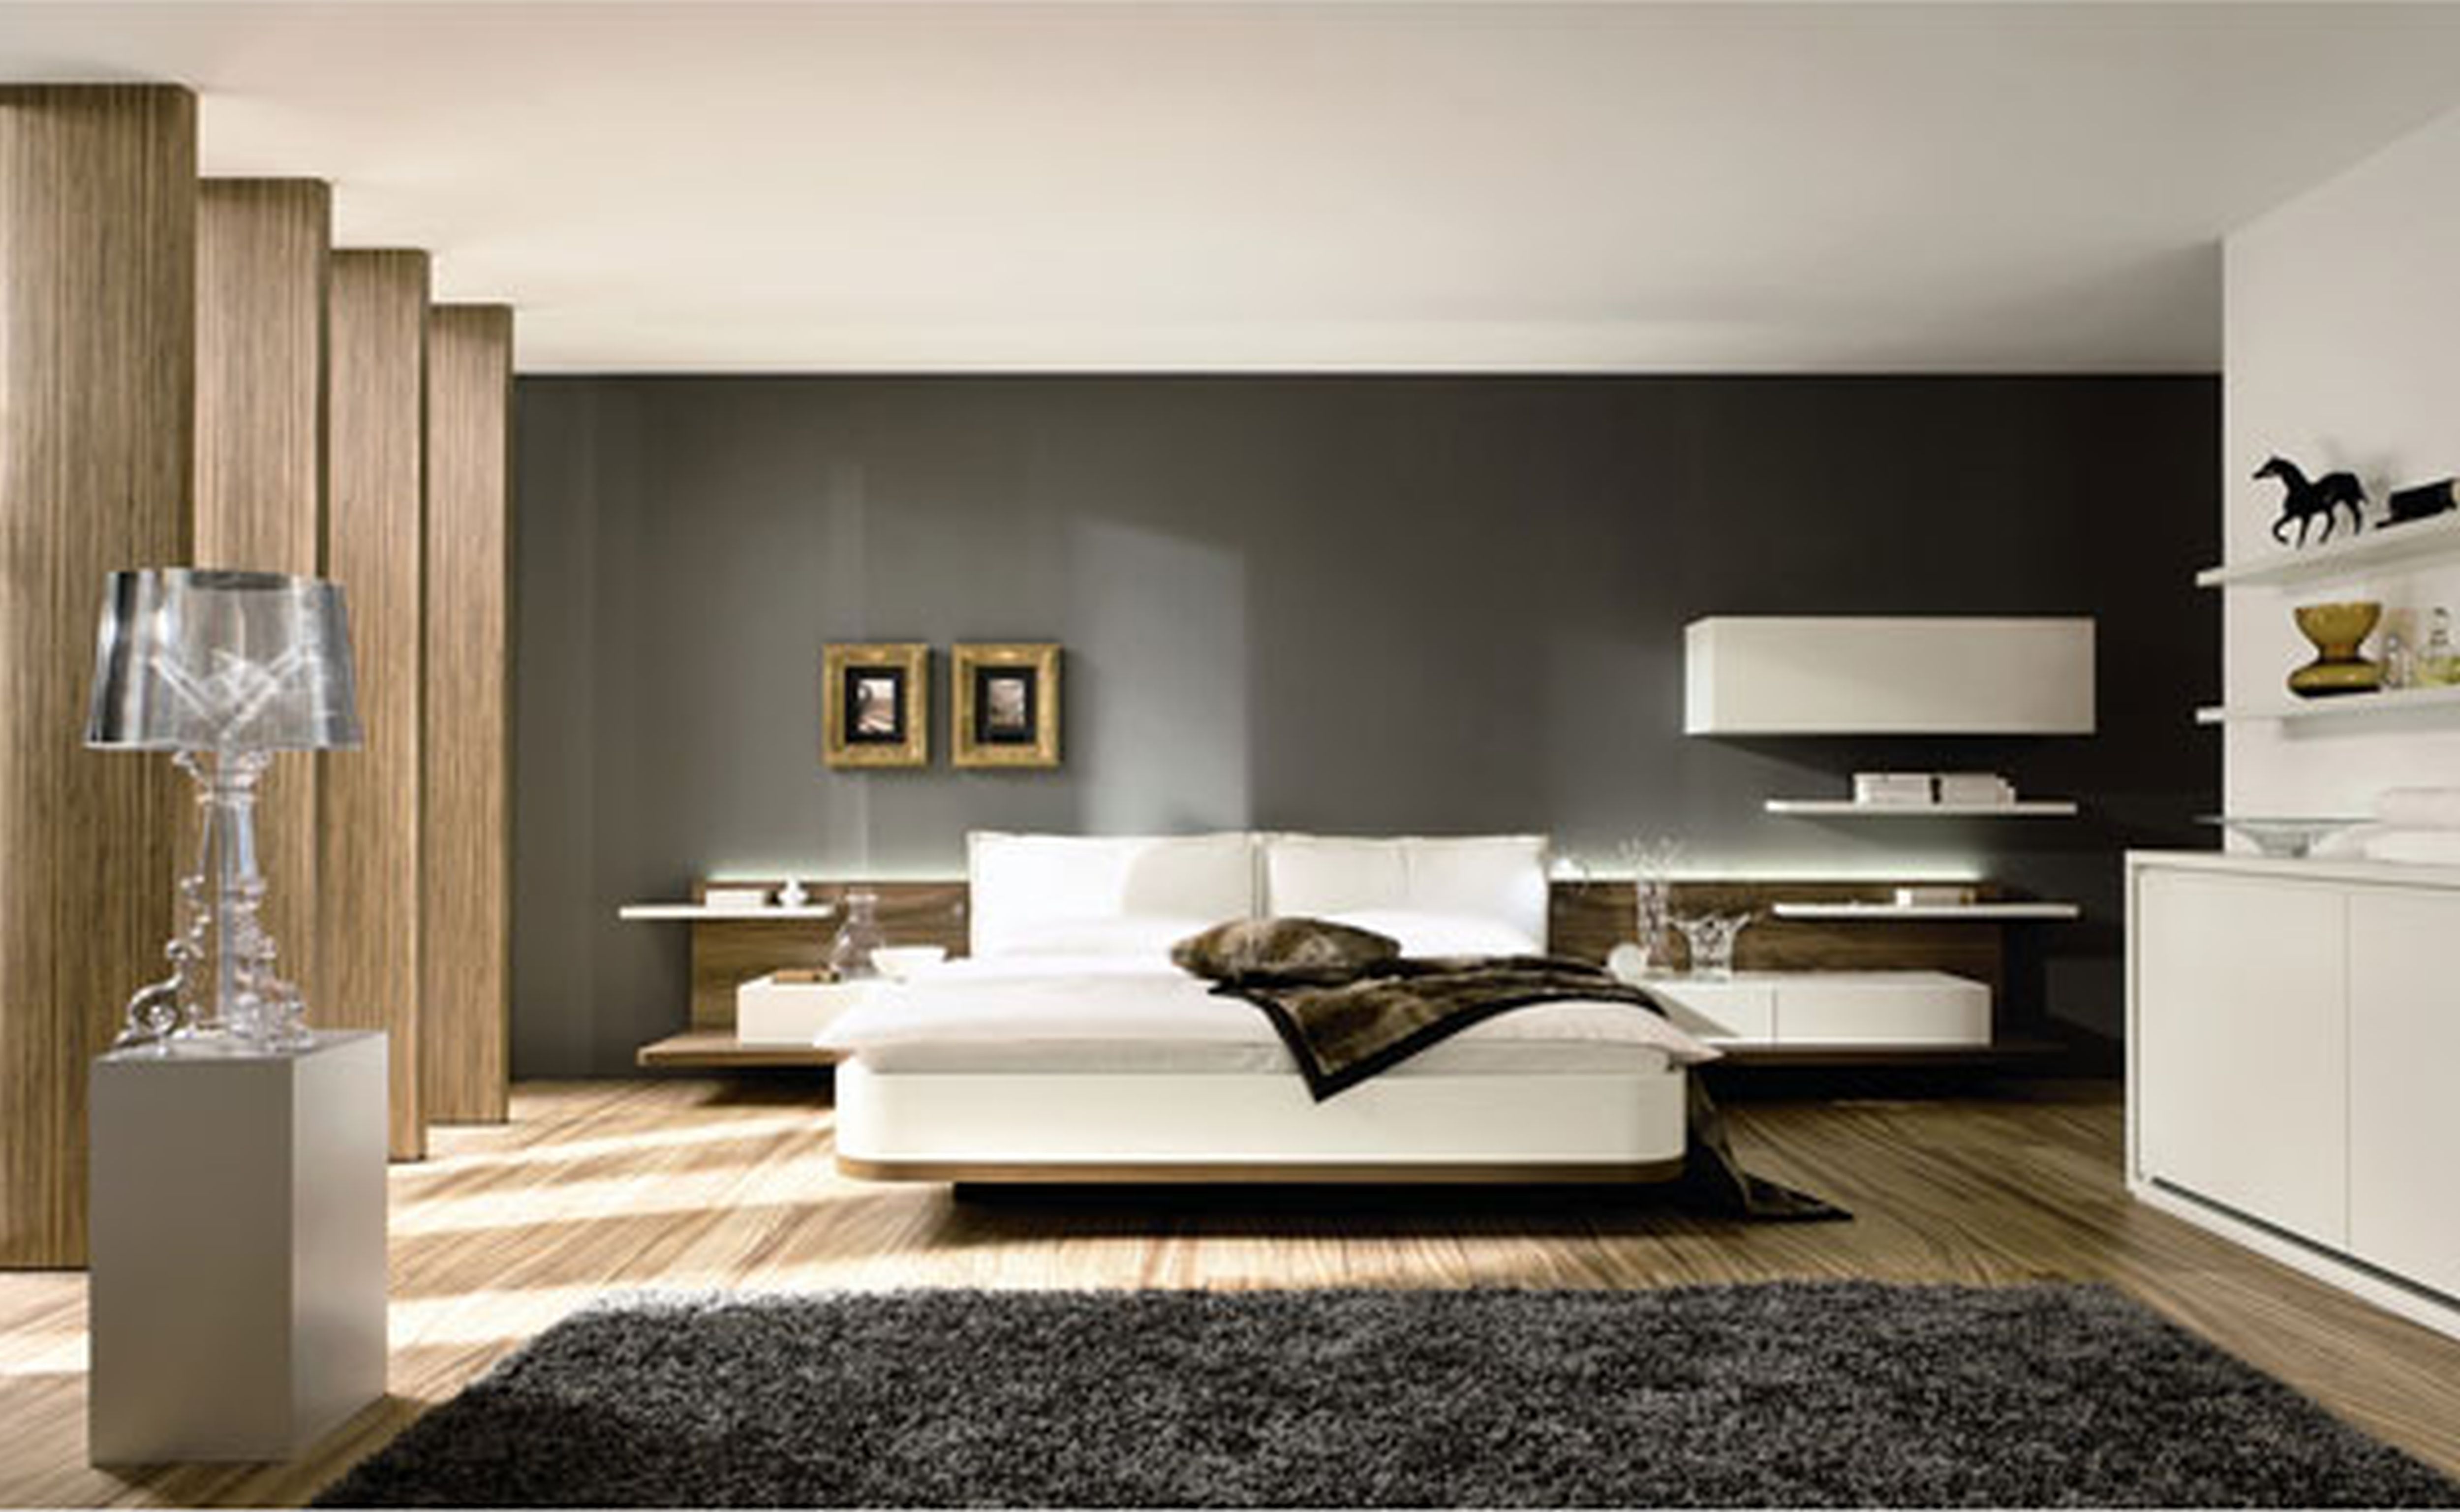 Modern Bedroom Decor: Elegance And Comfort Combined